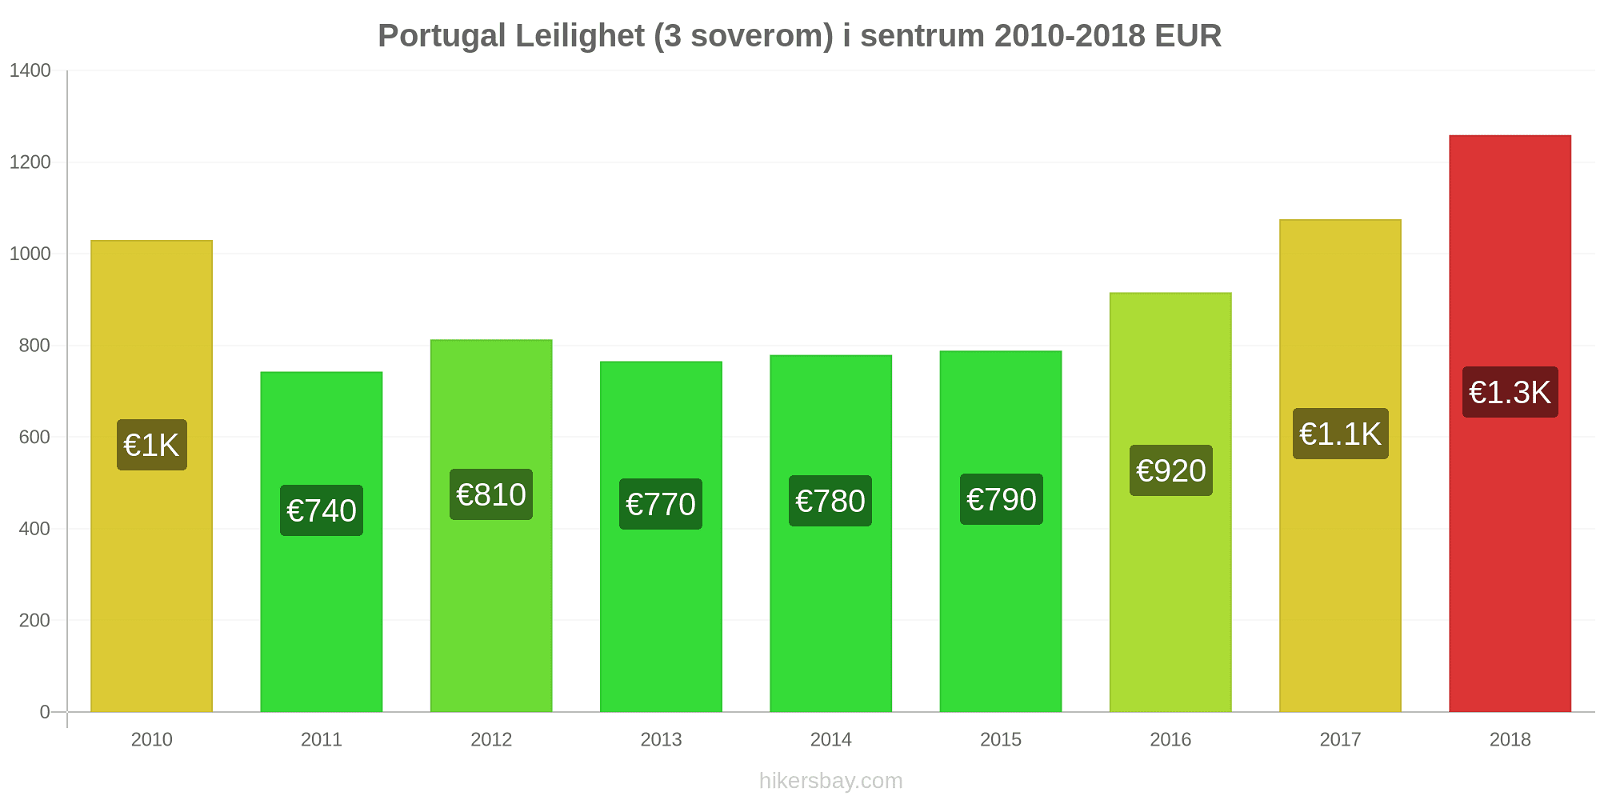 Portugal prisendringer Leilighet (3 soverom) i sentrum hikersbay.com